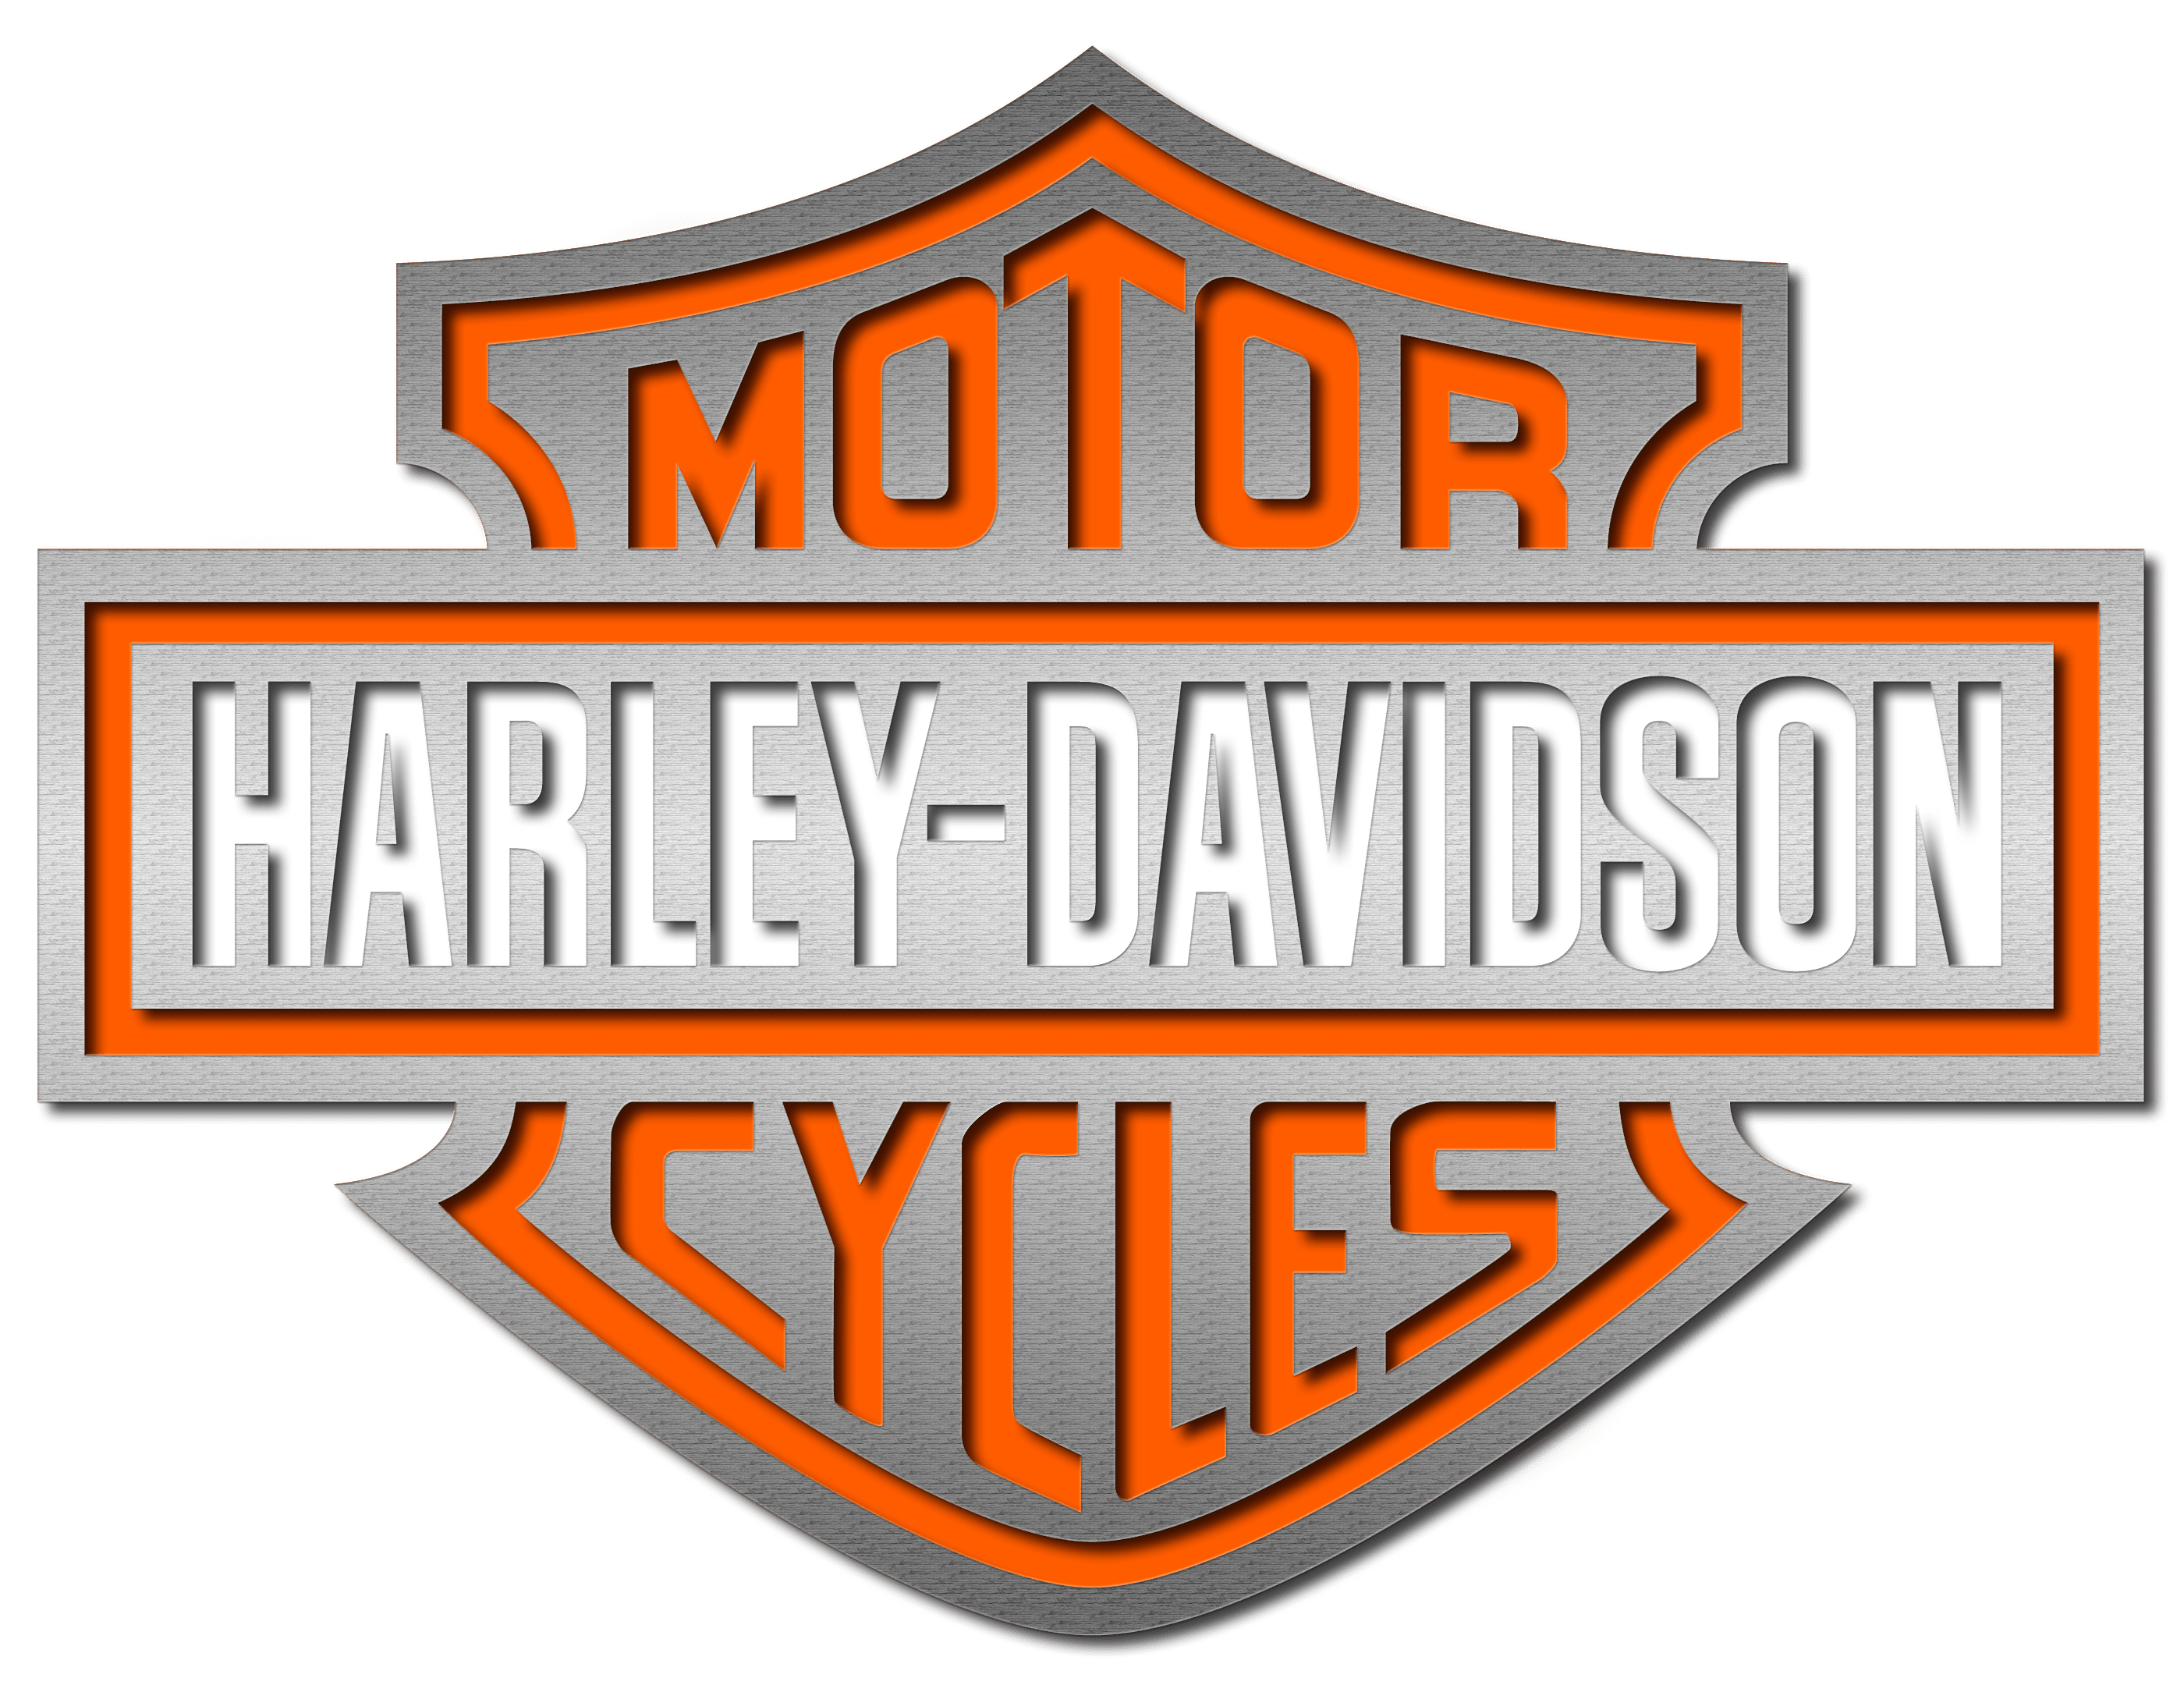 harley davidson logo png